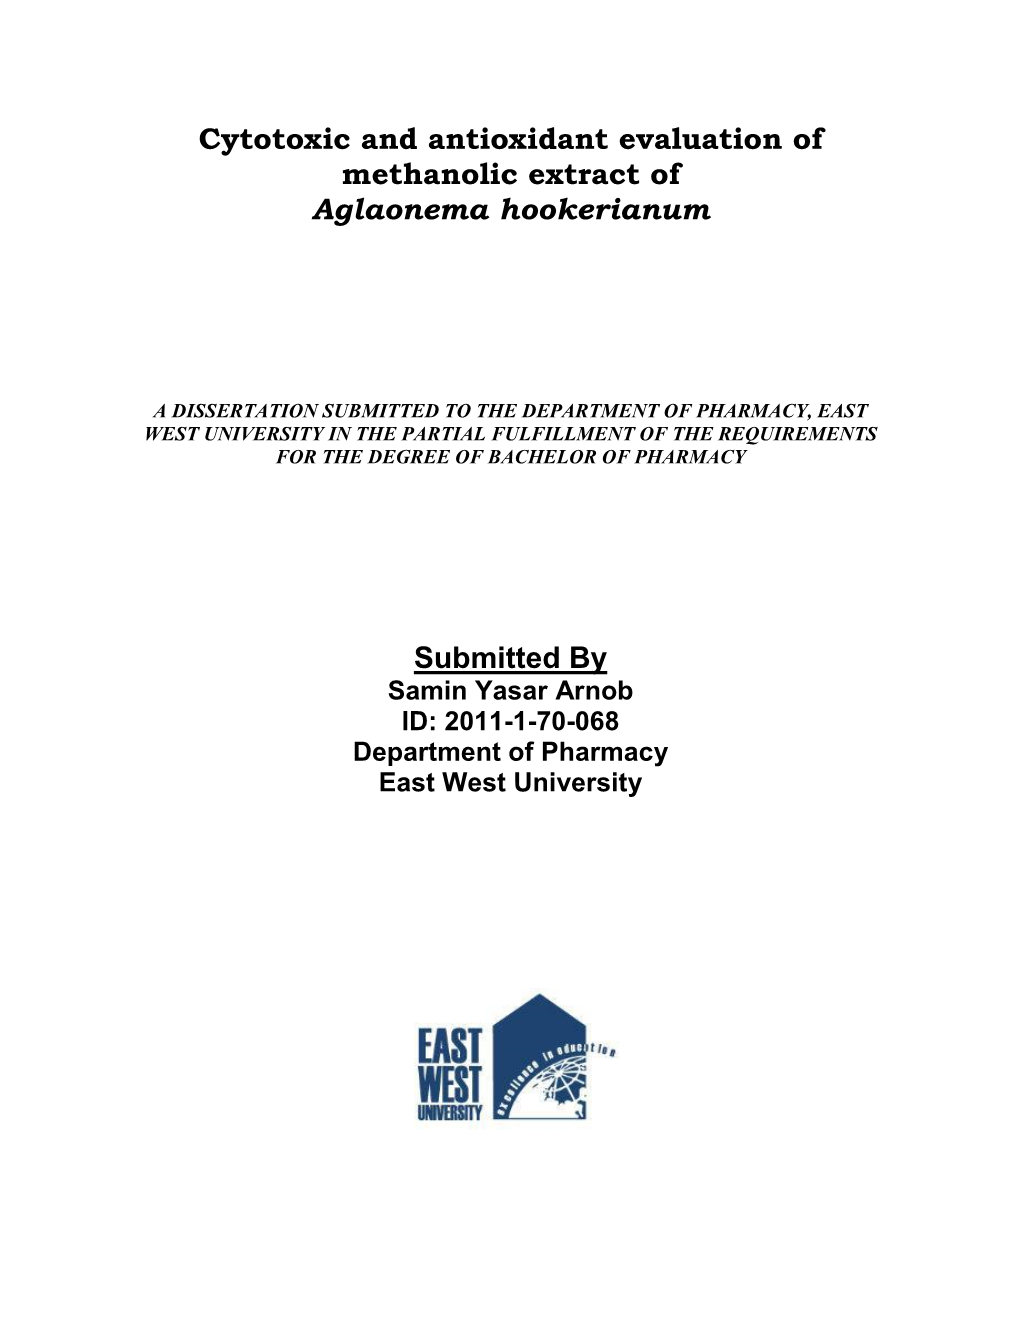 Cytotoxic and Antioxidant Evaluation of Methanolic Extract of Aglaonema Hookerianum